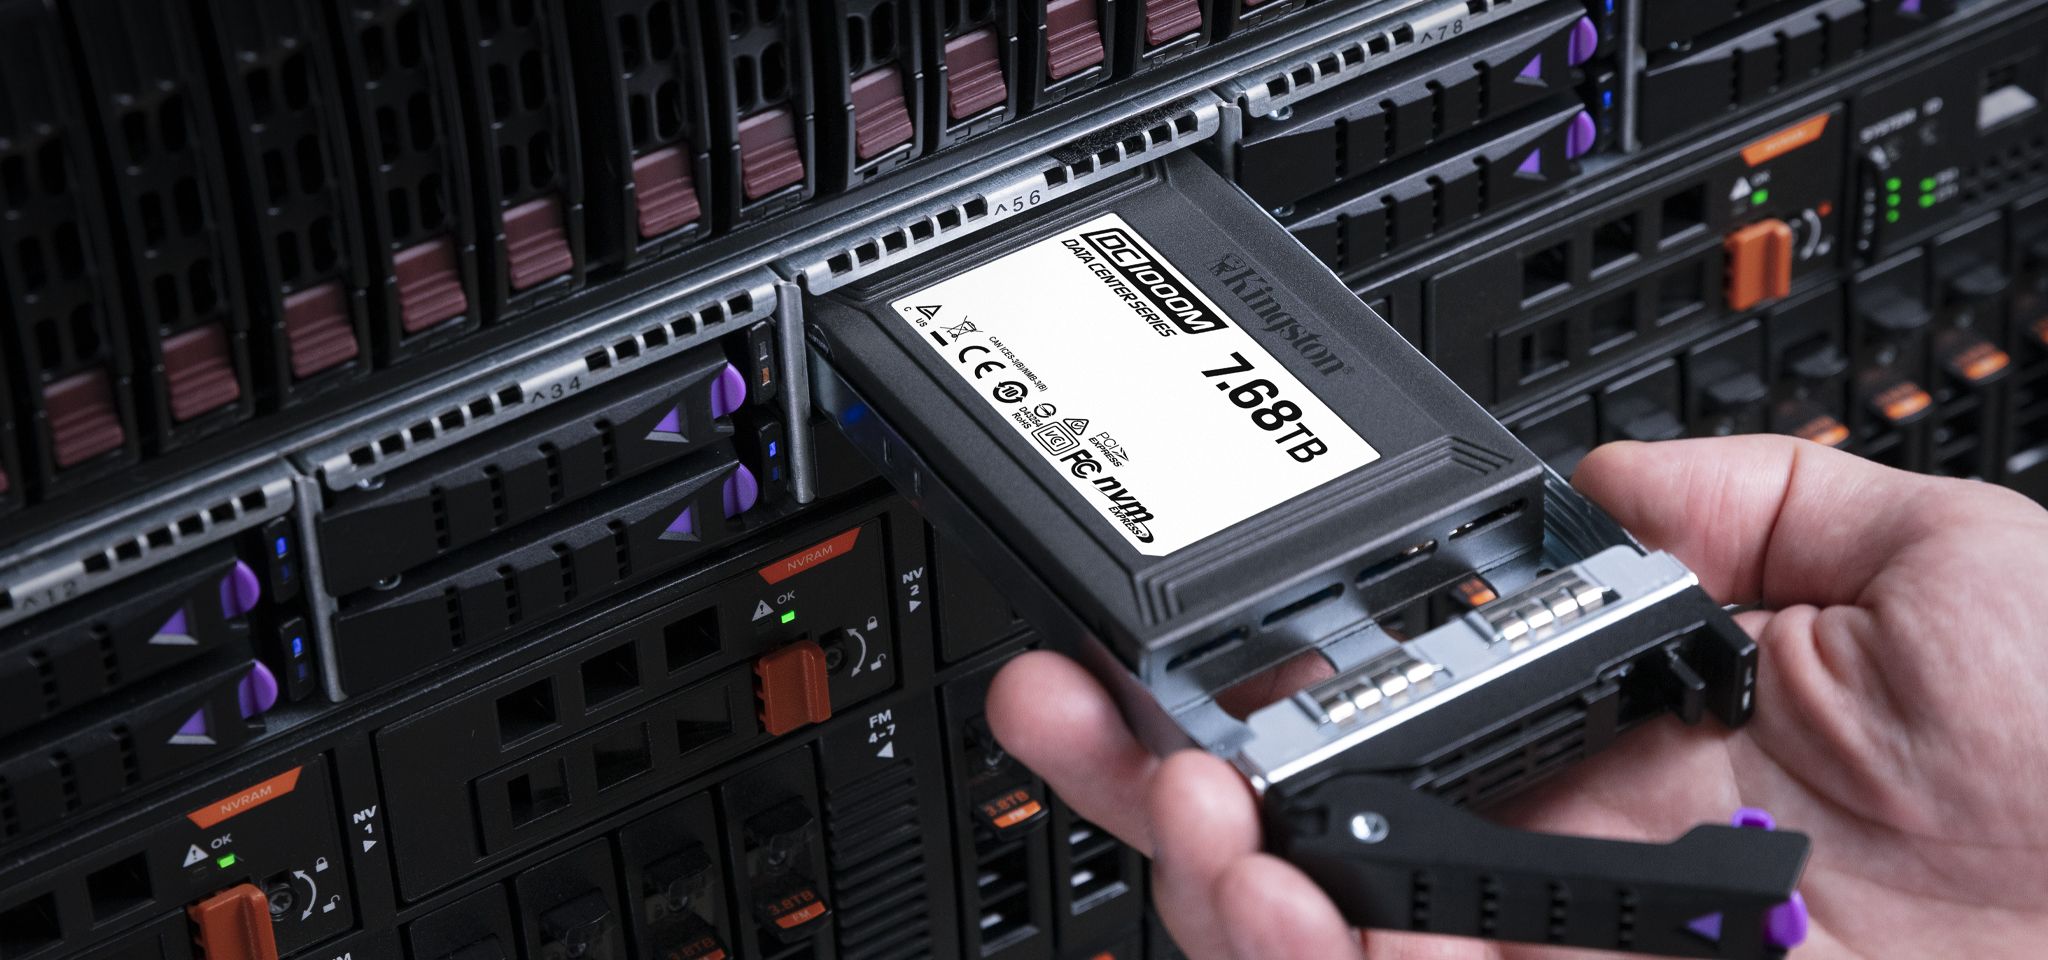 kingston dc1000m 2 Kingston เปิดตัว NVMe SSD DC1000M รุ่นใหม่ล่าสุดซึ่งเป็น U.2 NVMe PCIe SSD ระดับองค์กรสำหรับศูนย์ข้อมูล สำหรับการใช้งานแบบผสมผสาน